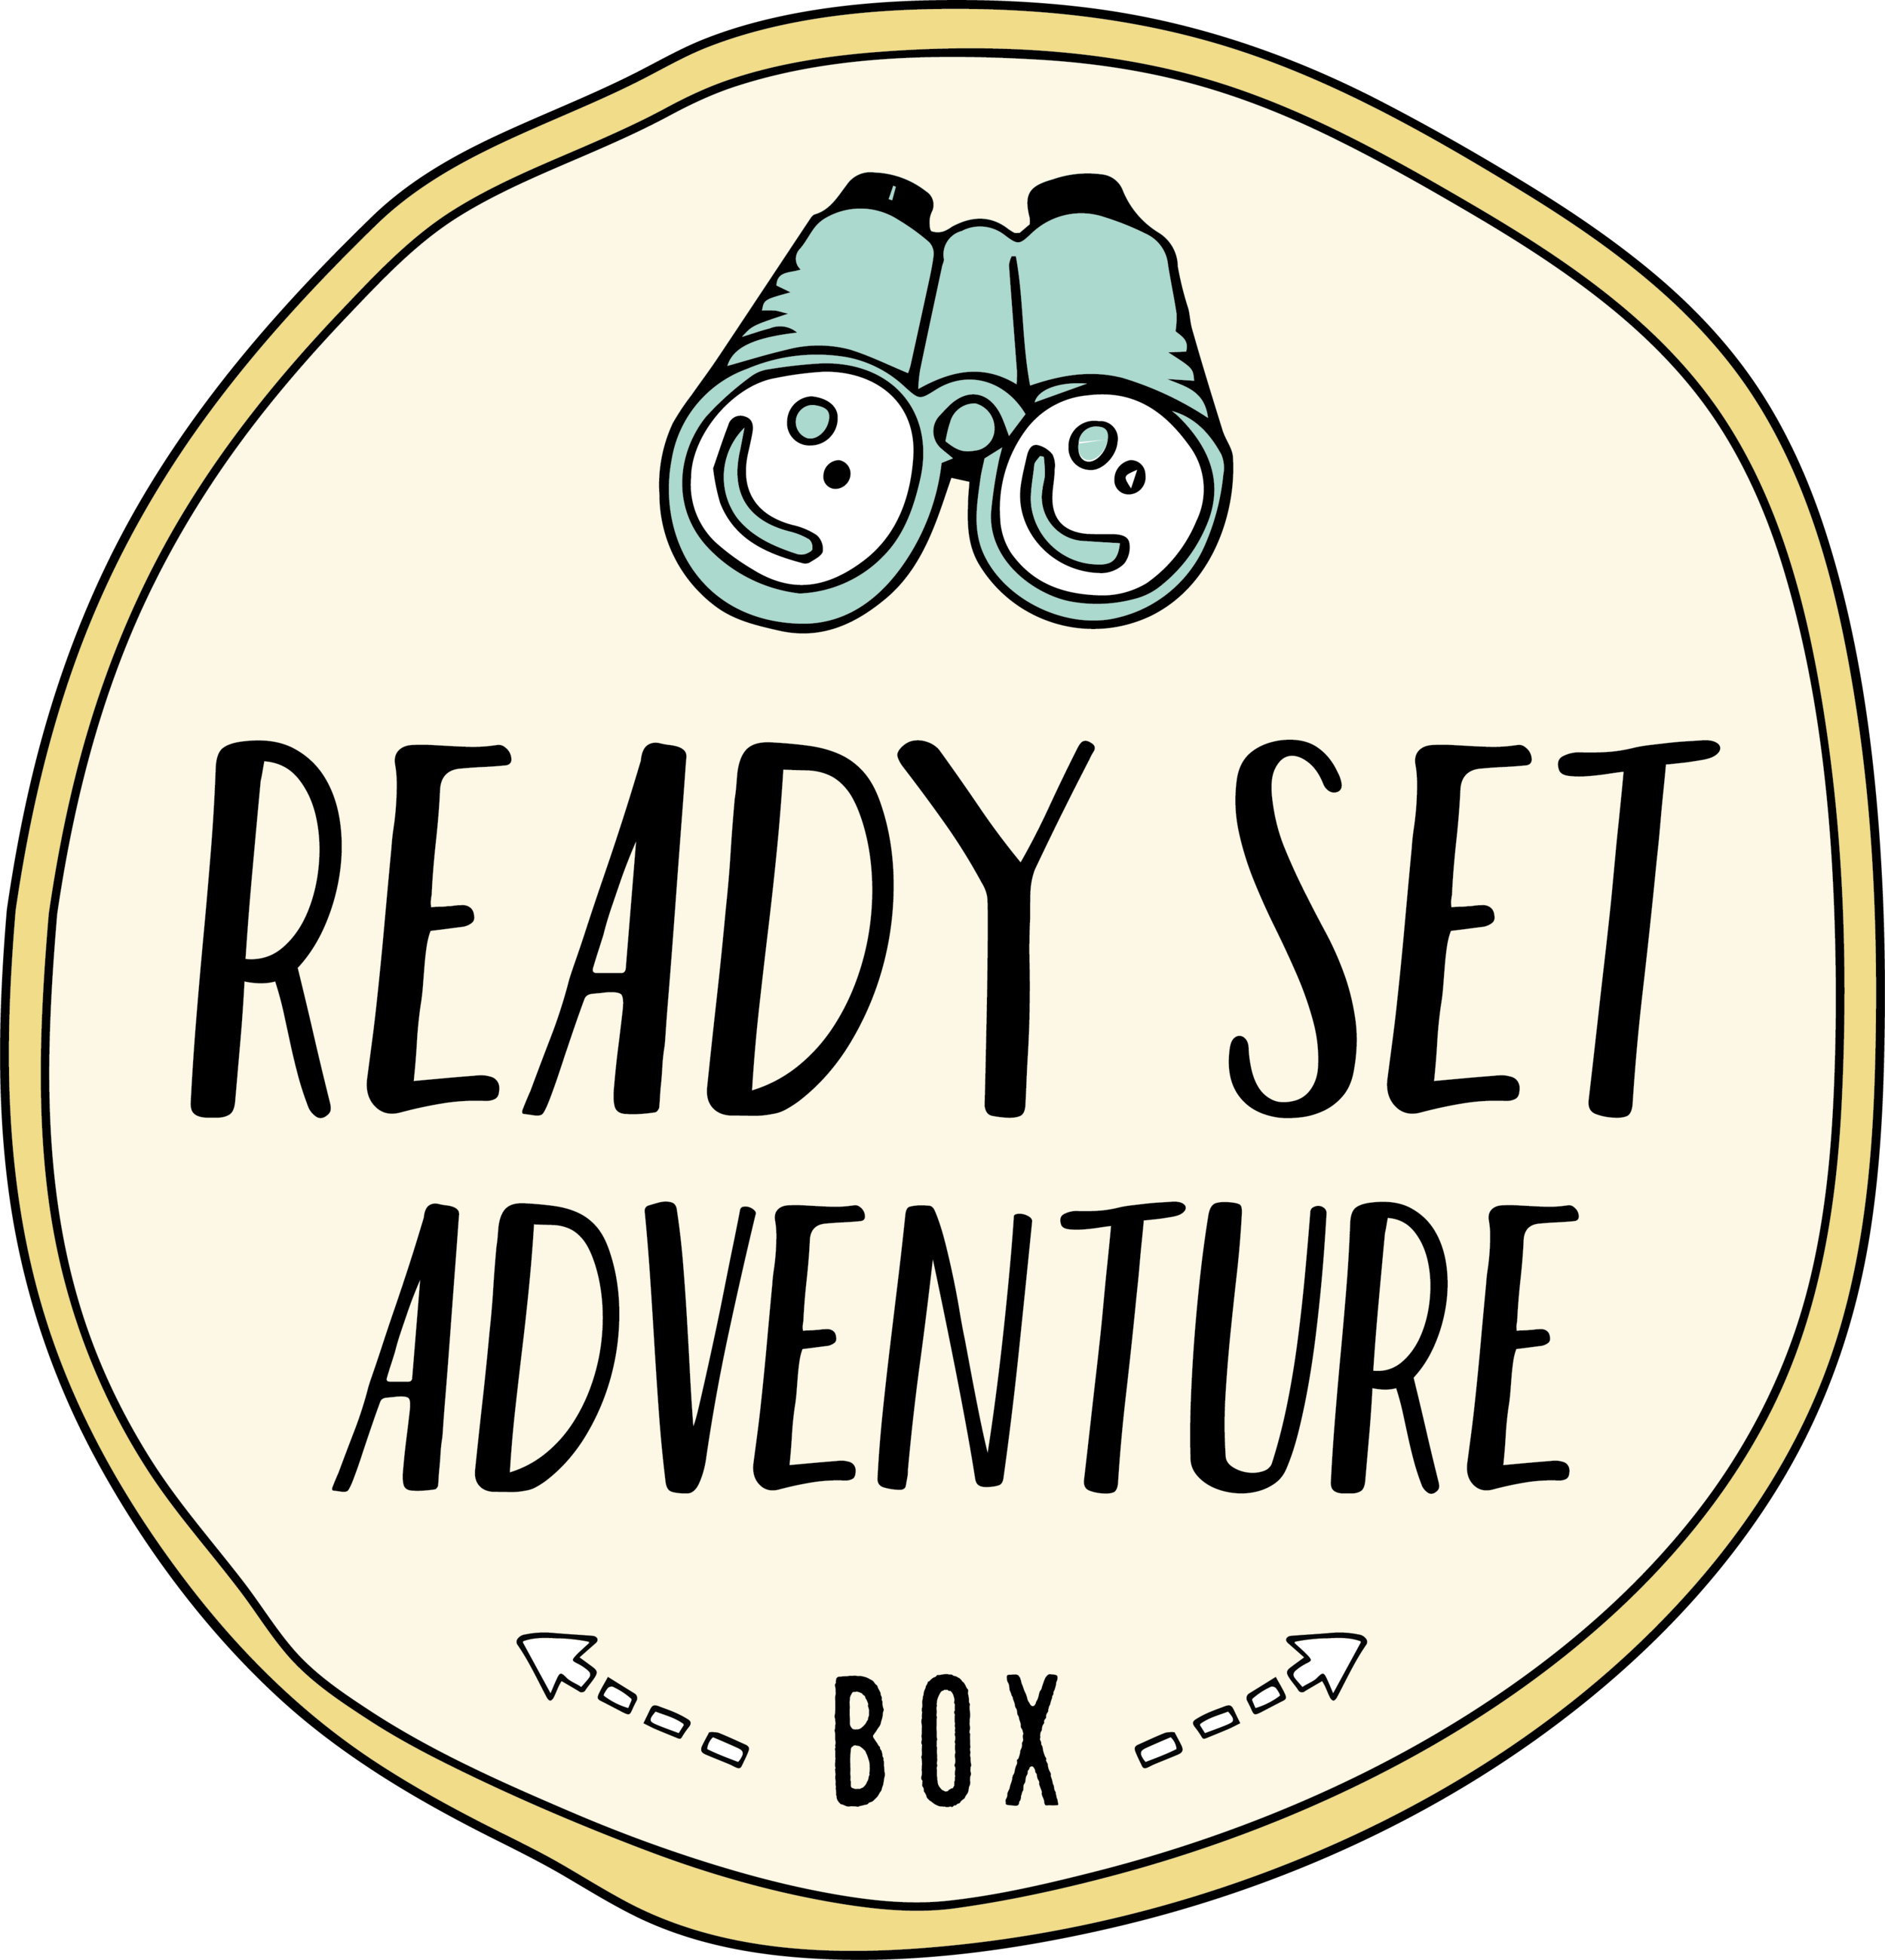 The Hub  Adventure Box